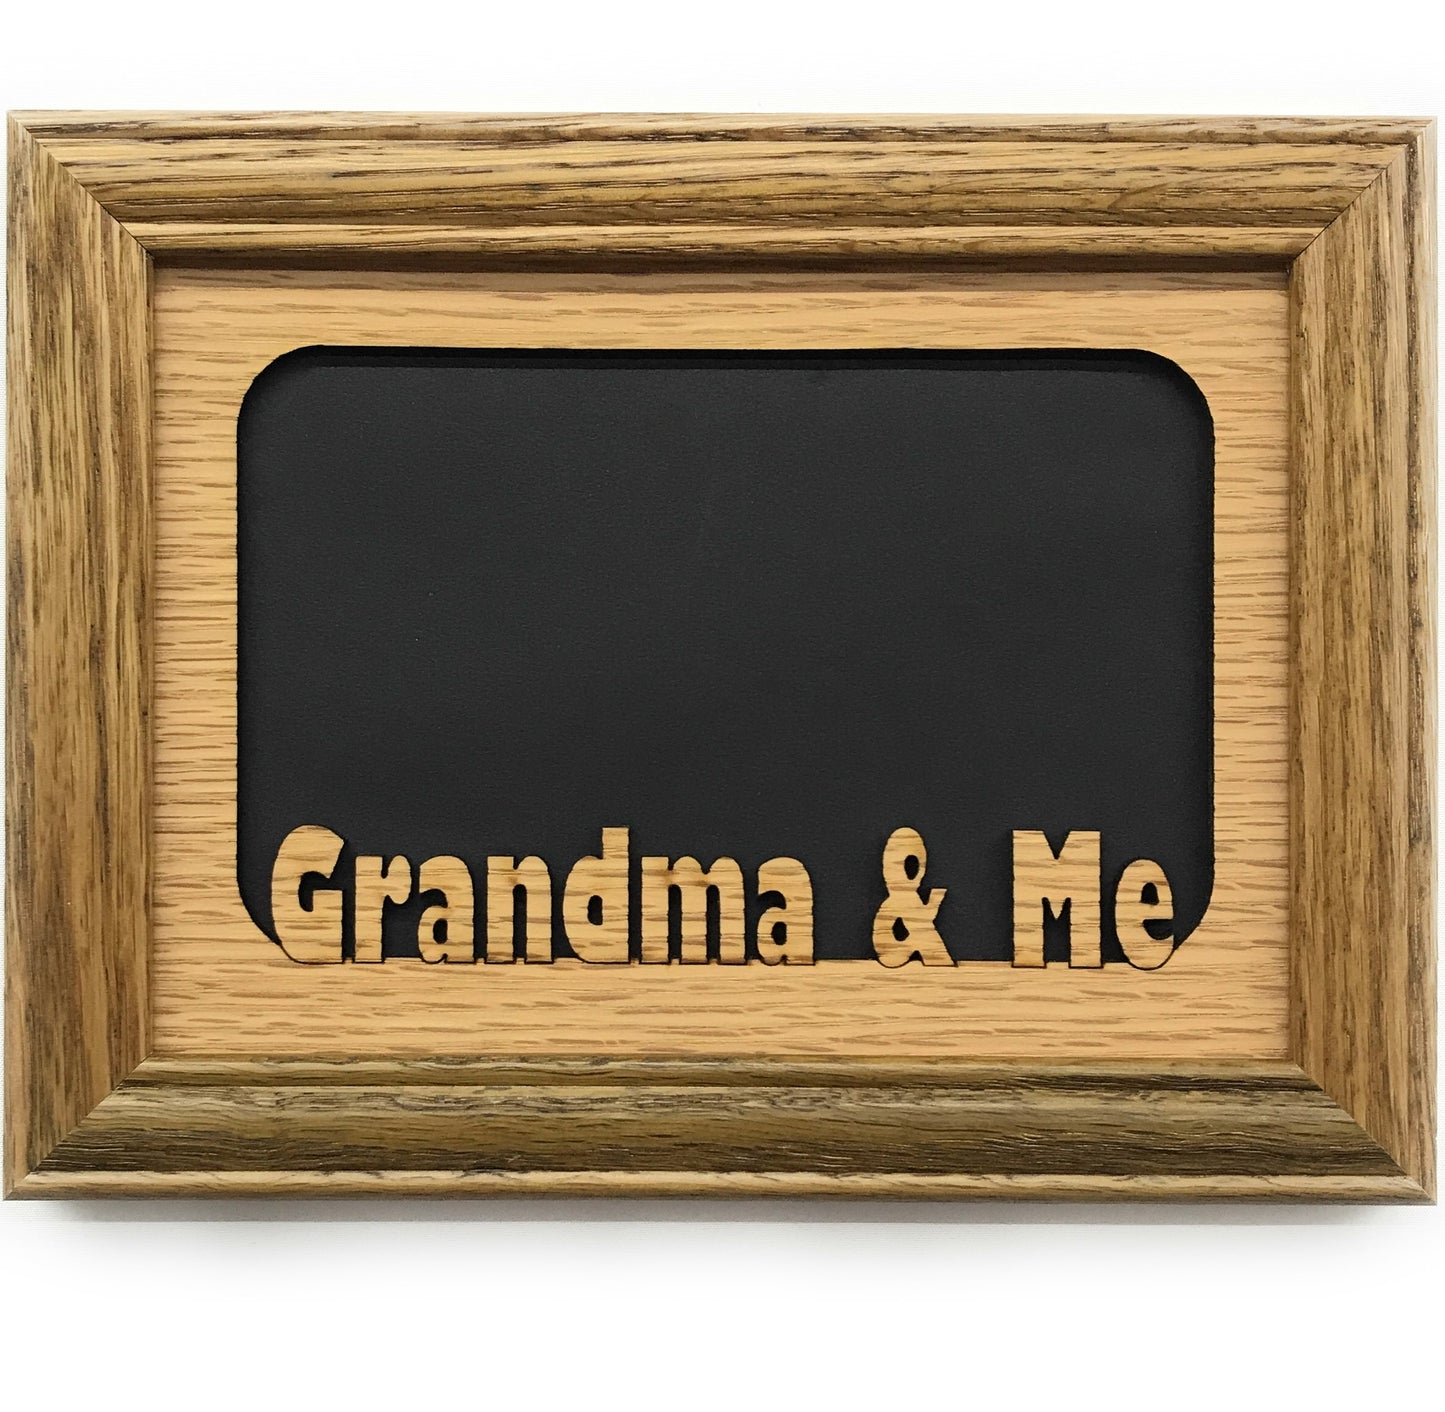 Grandma & Us Picture Frame - 5x7 Frame Hold 4x6 Photo